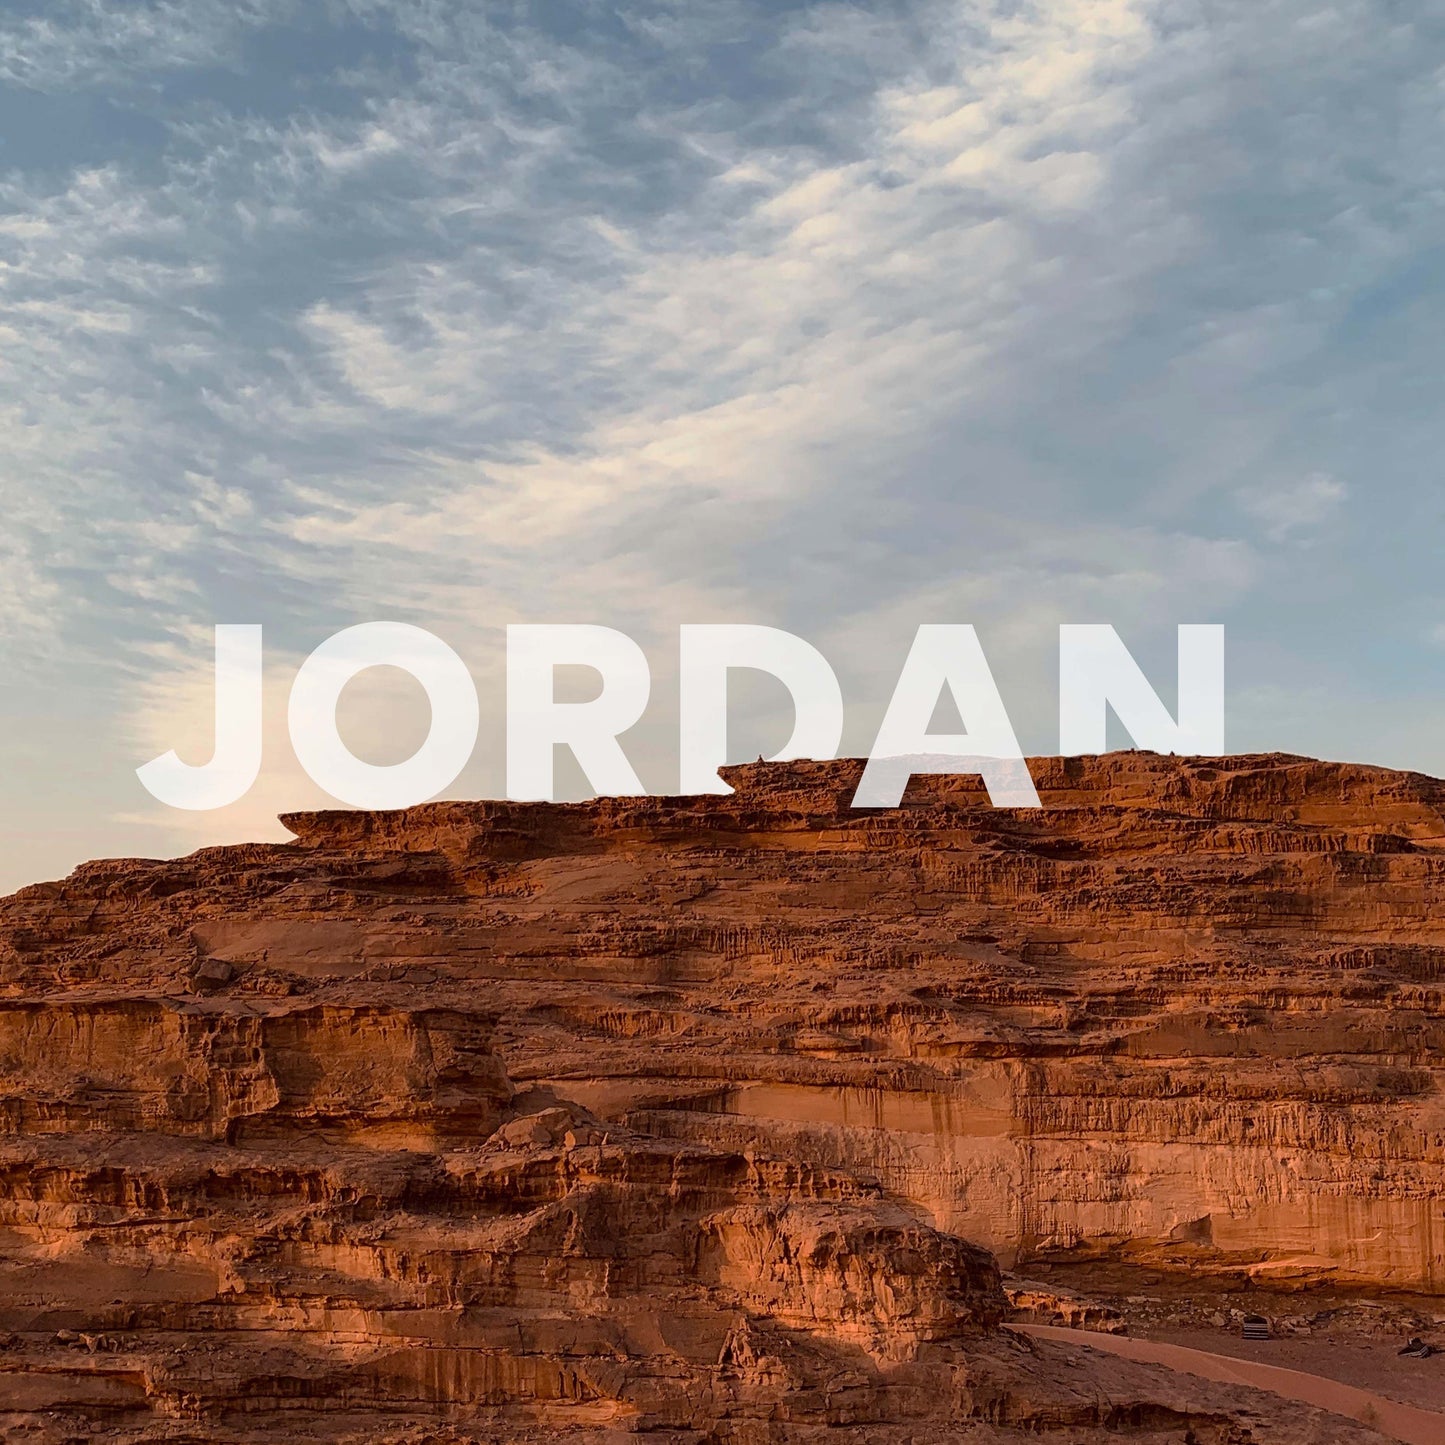 Jordan Roundtrip | 8 days